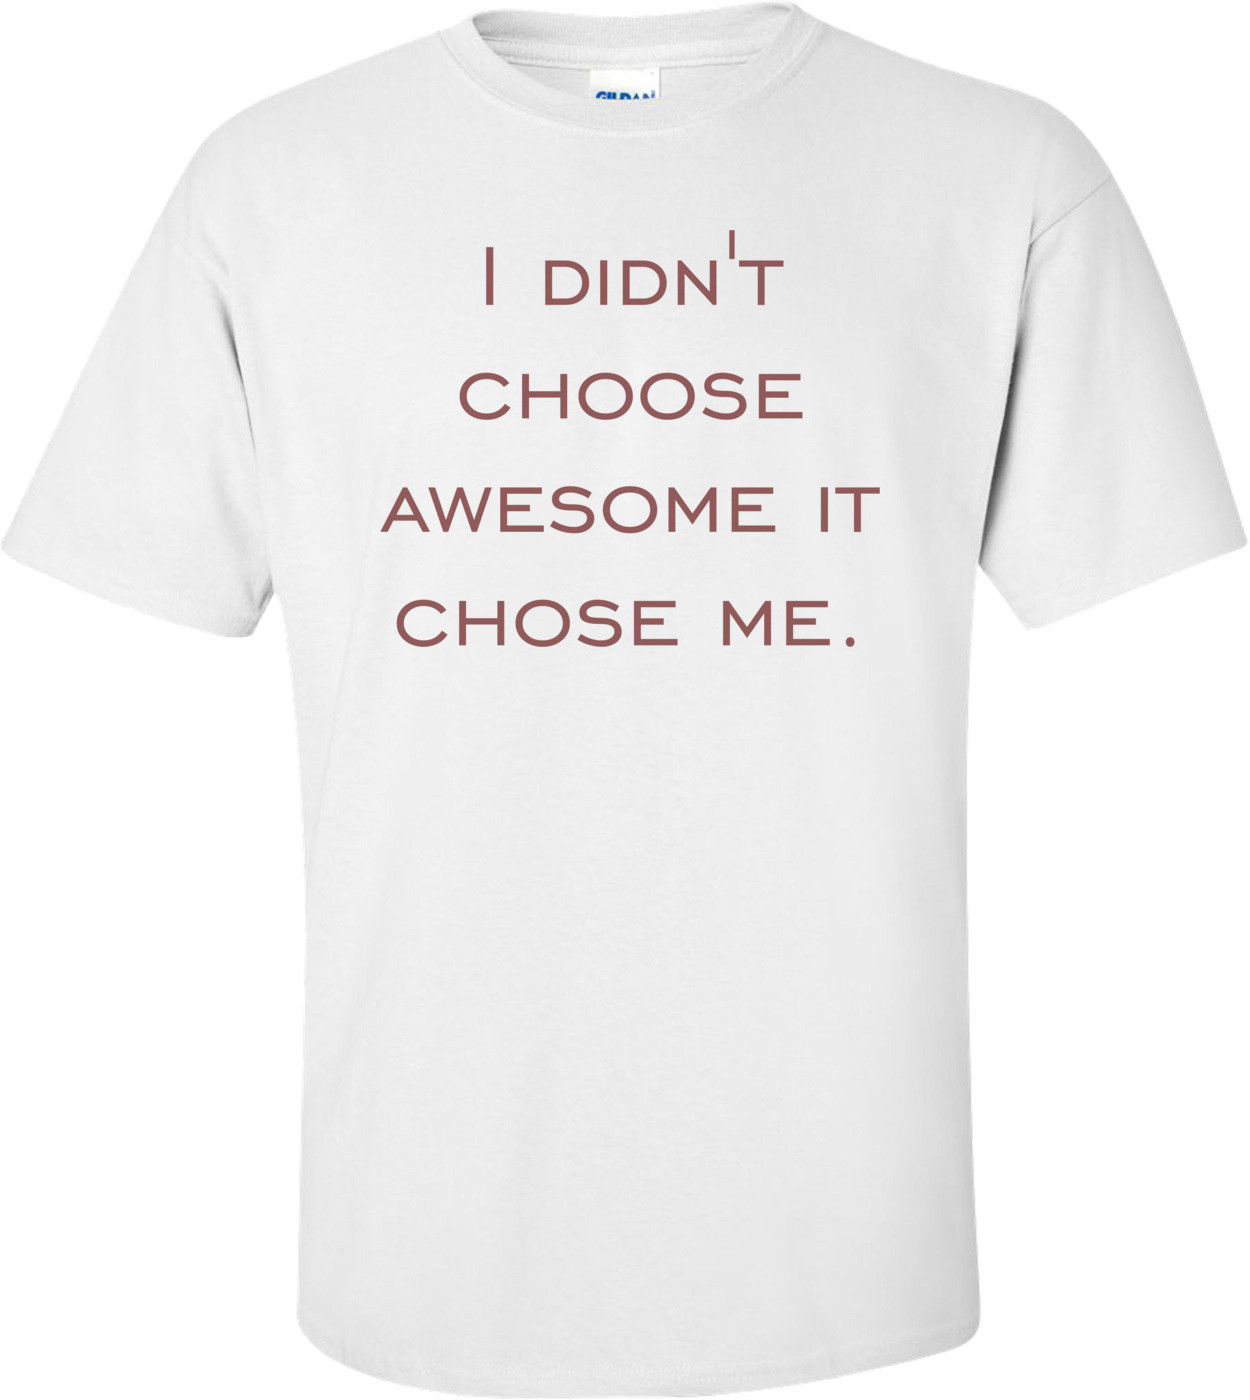 I didn't choose awesome it chose me. Shirt